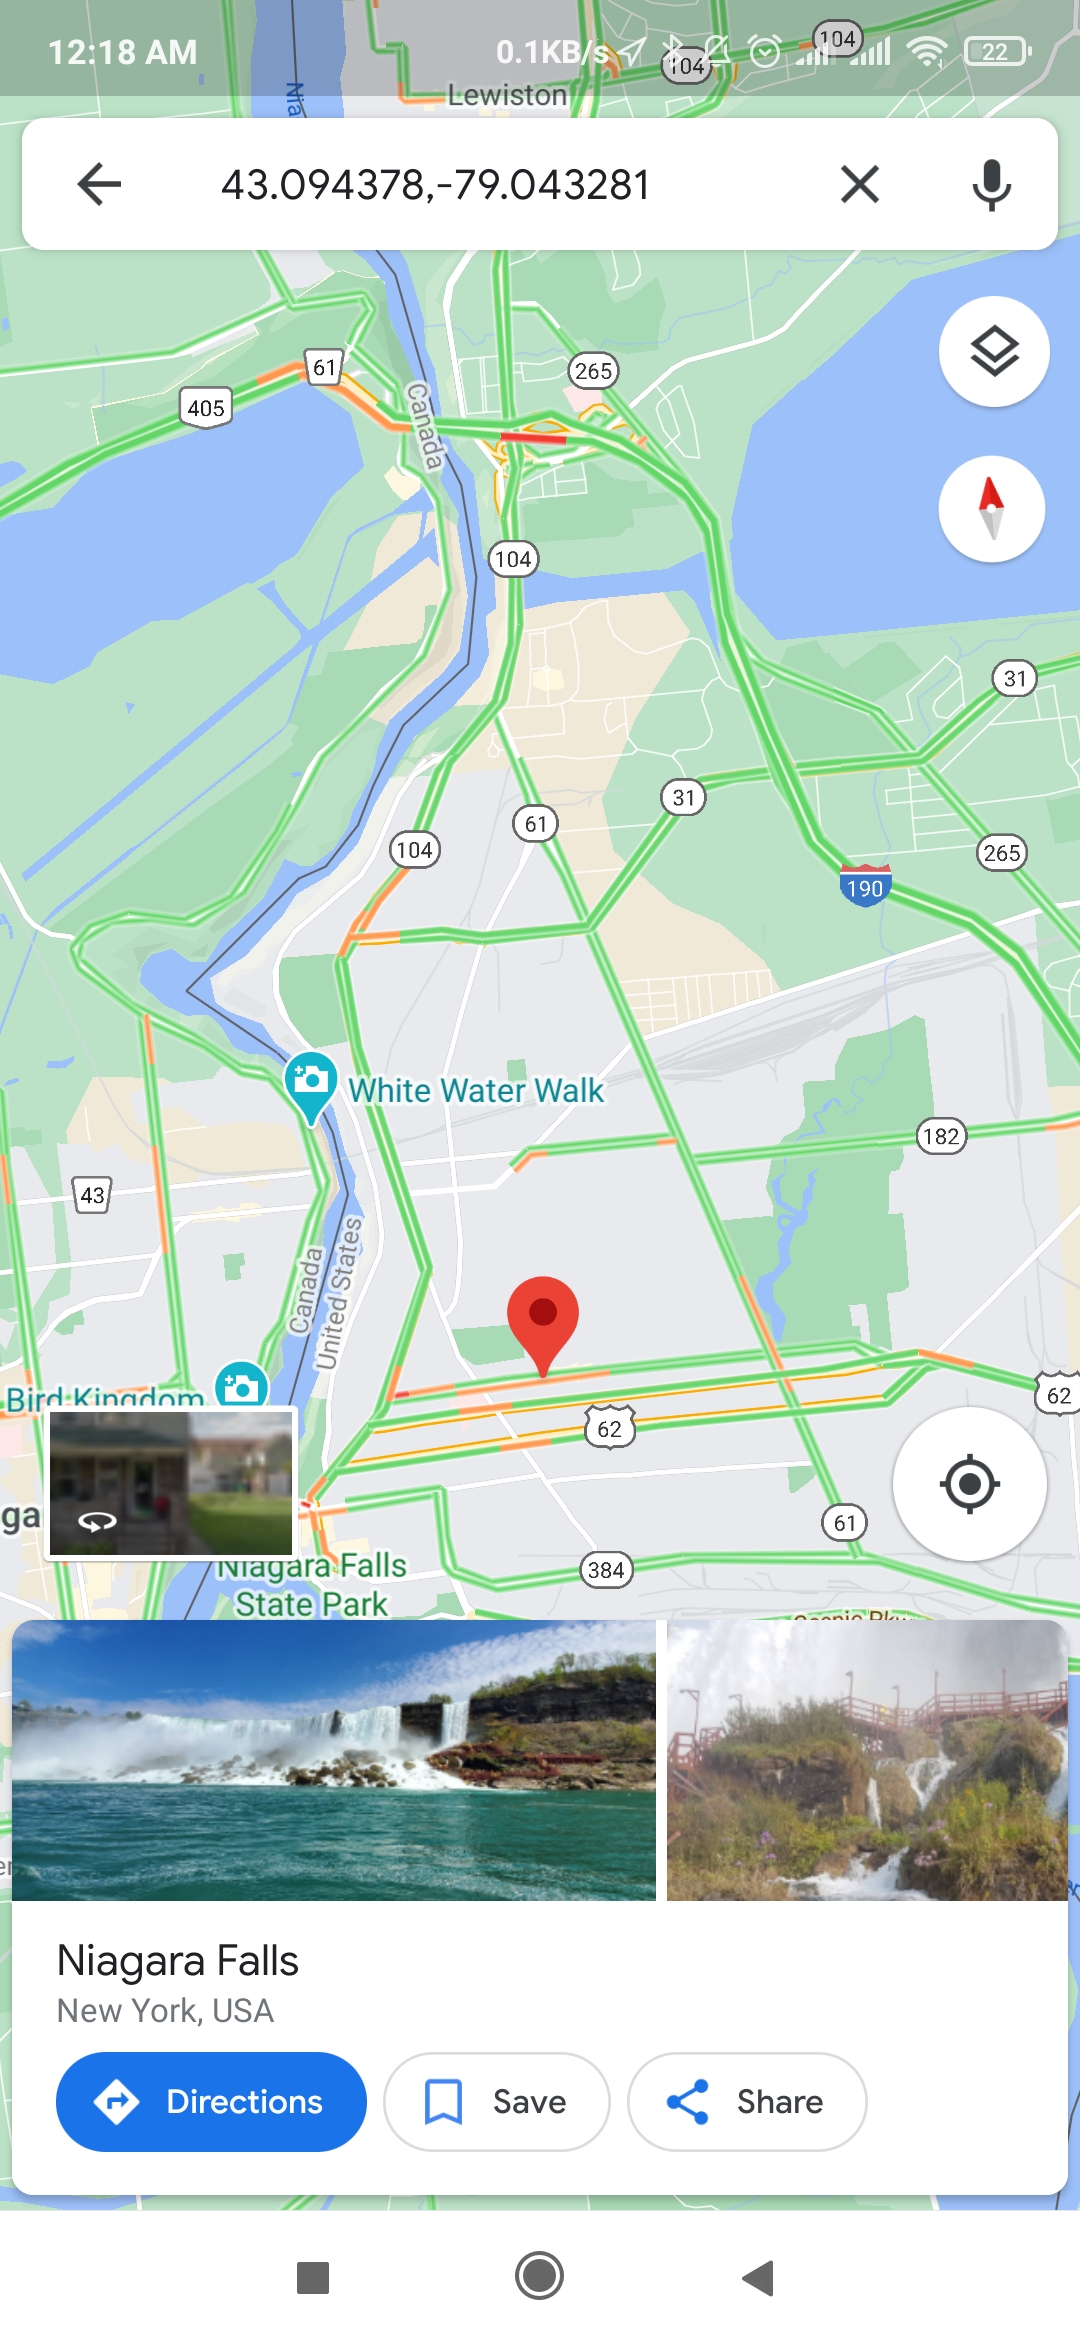 Yoghurt ujævnheder Anmeldelse How to Get the GPS Coordinates for a Location in Google Maps